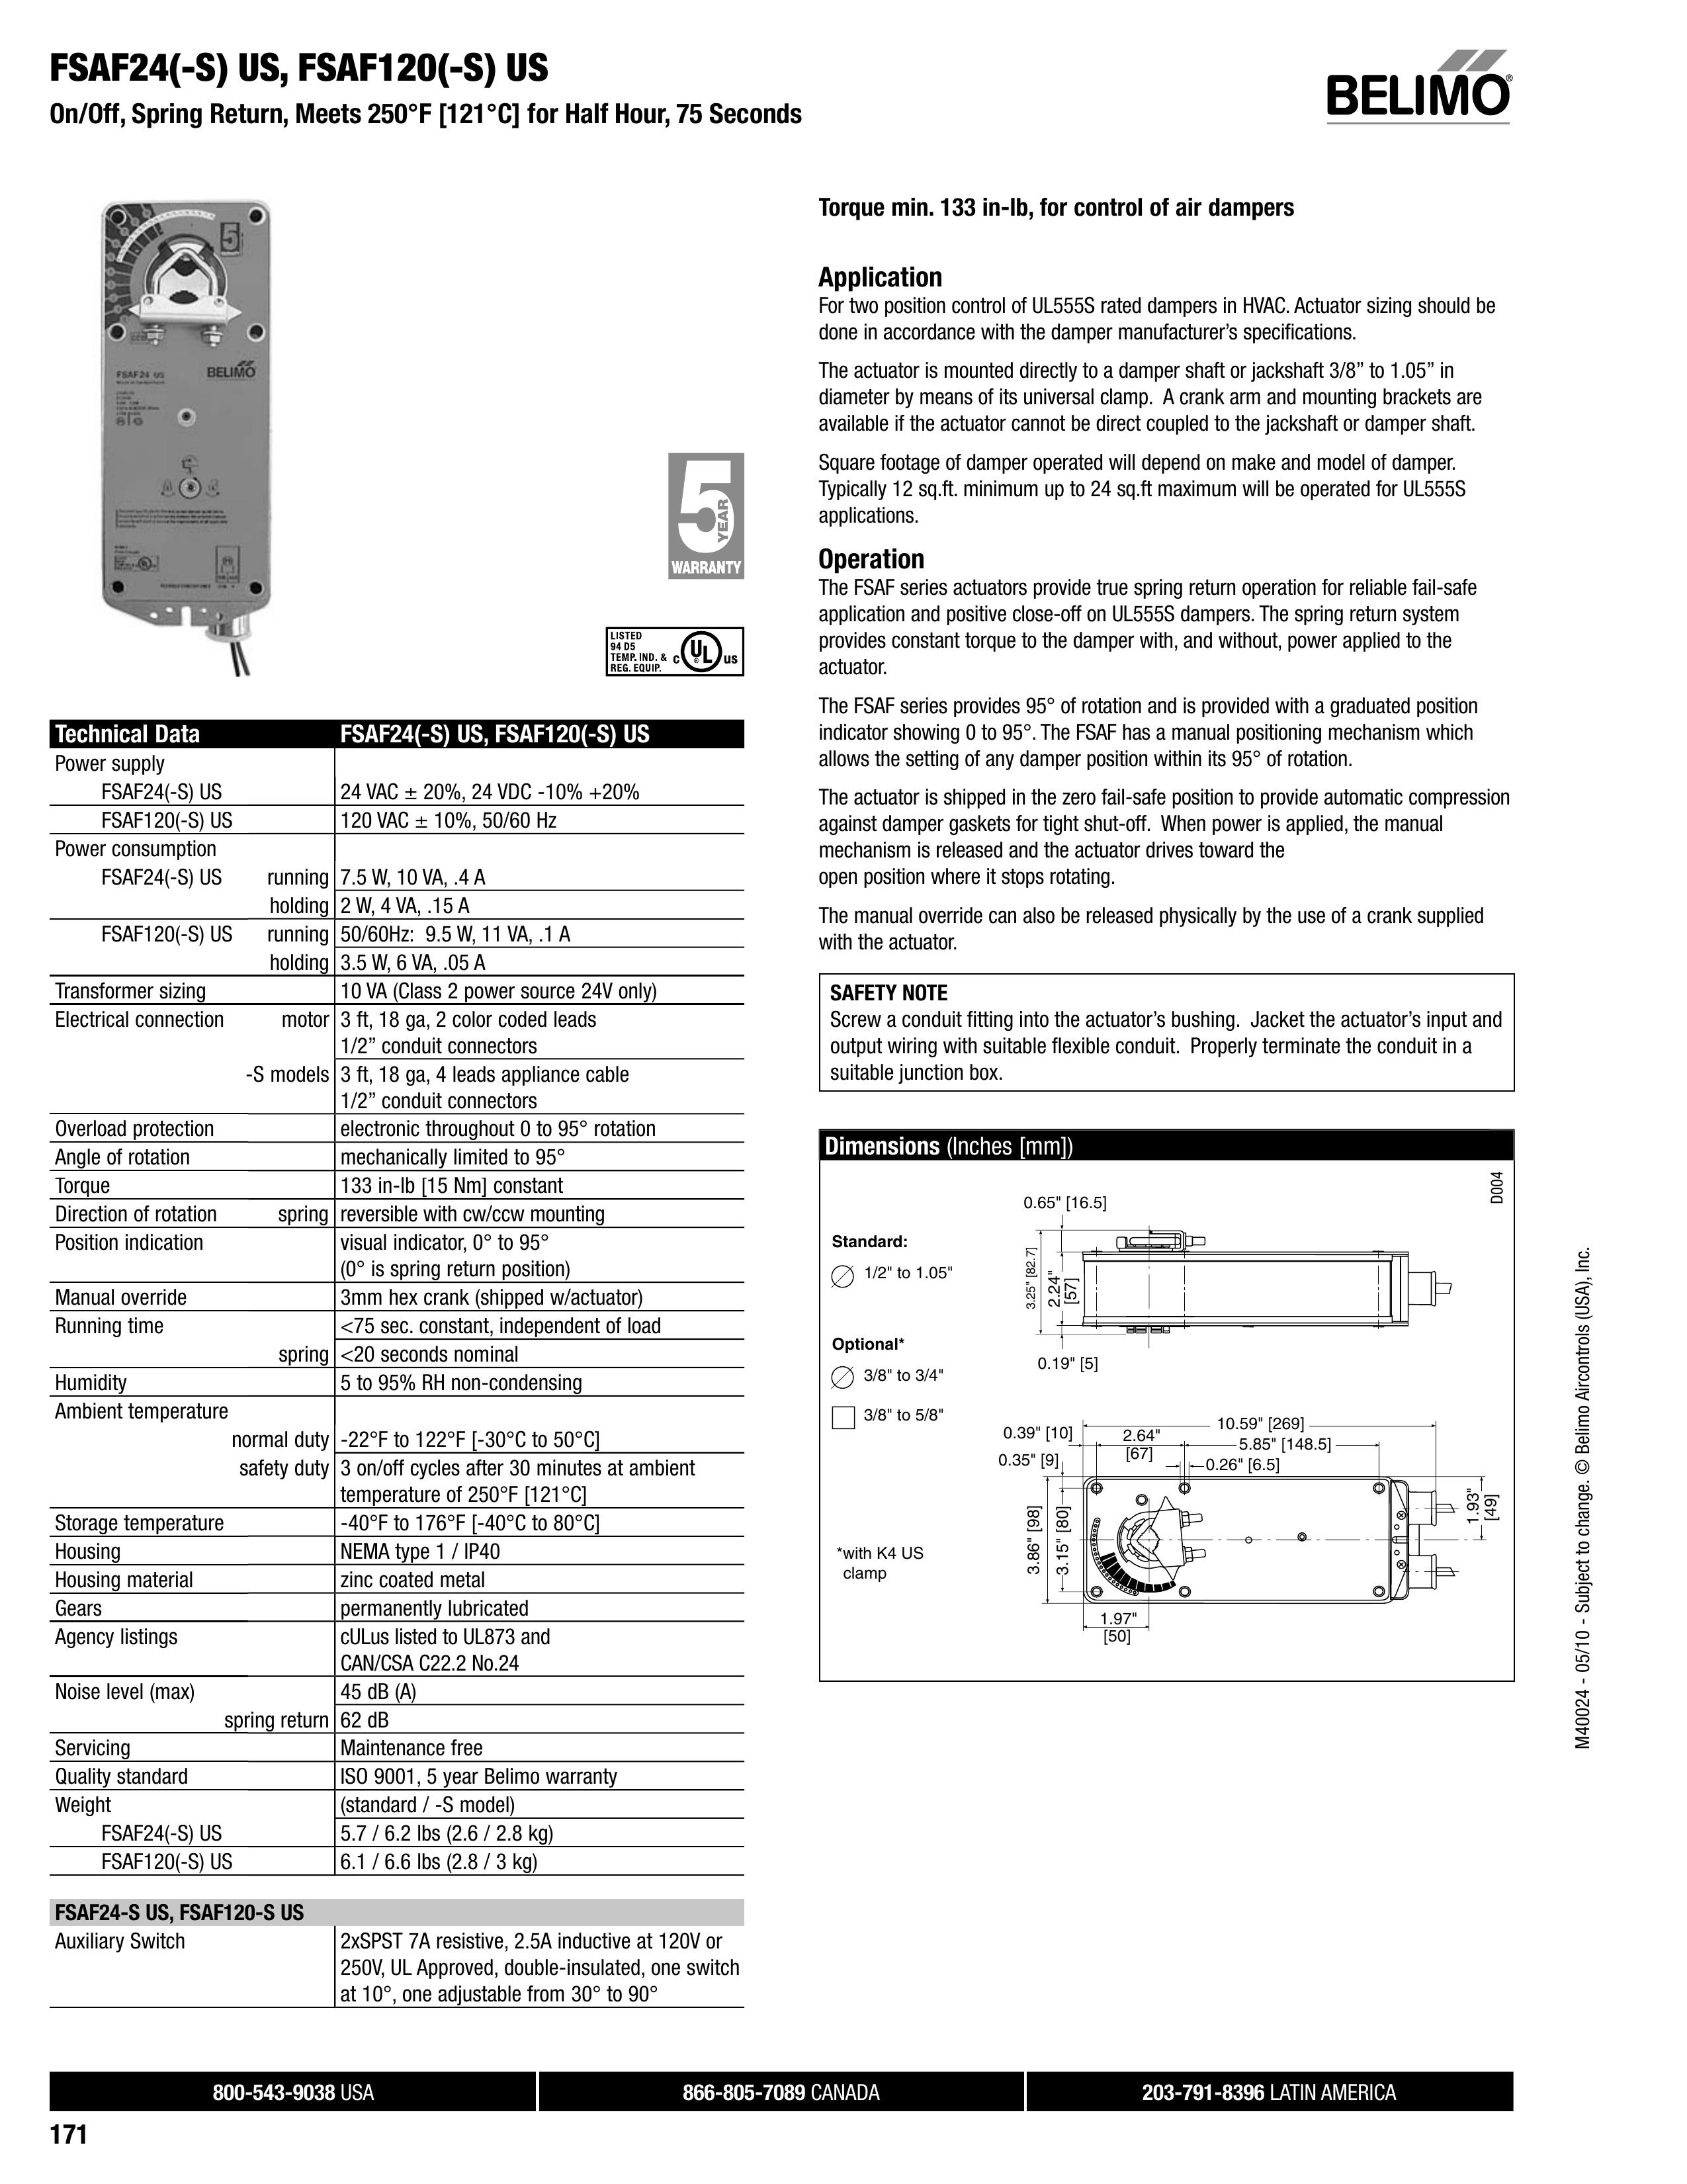 321 Studios FSAF24 Gas Grill User Manual